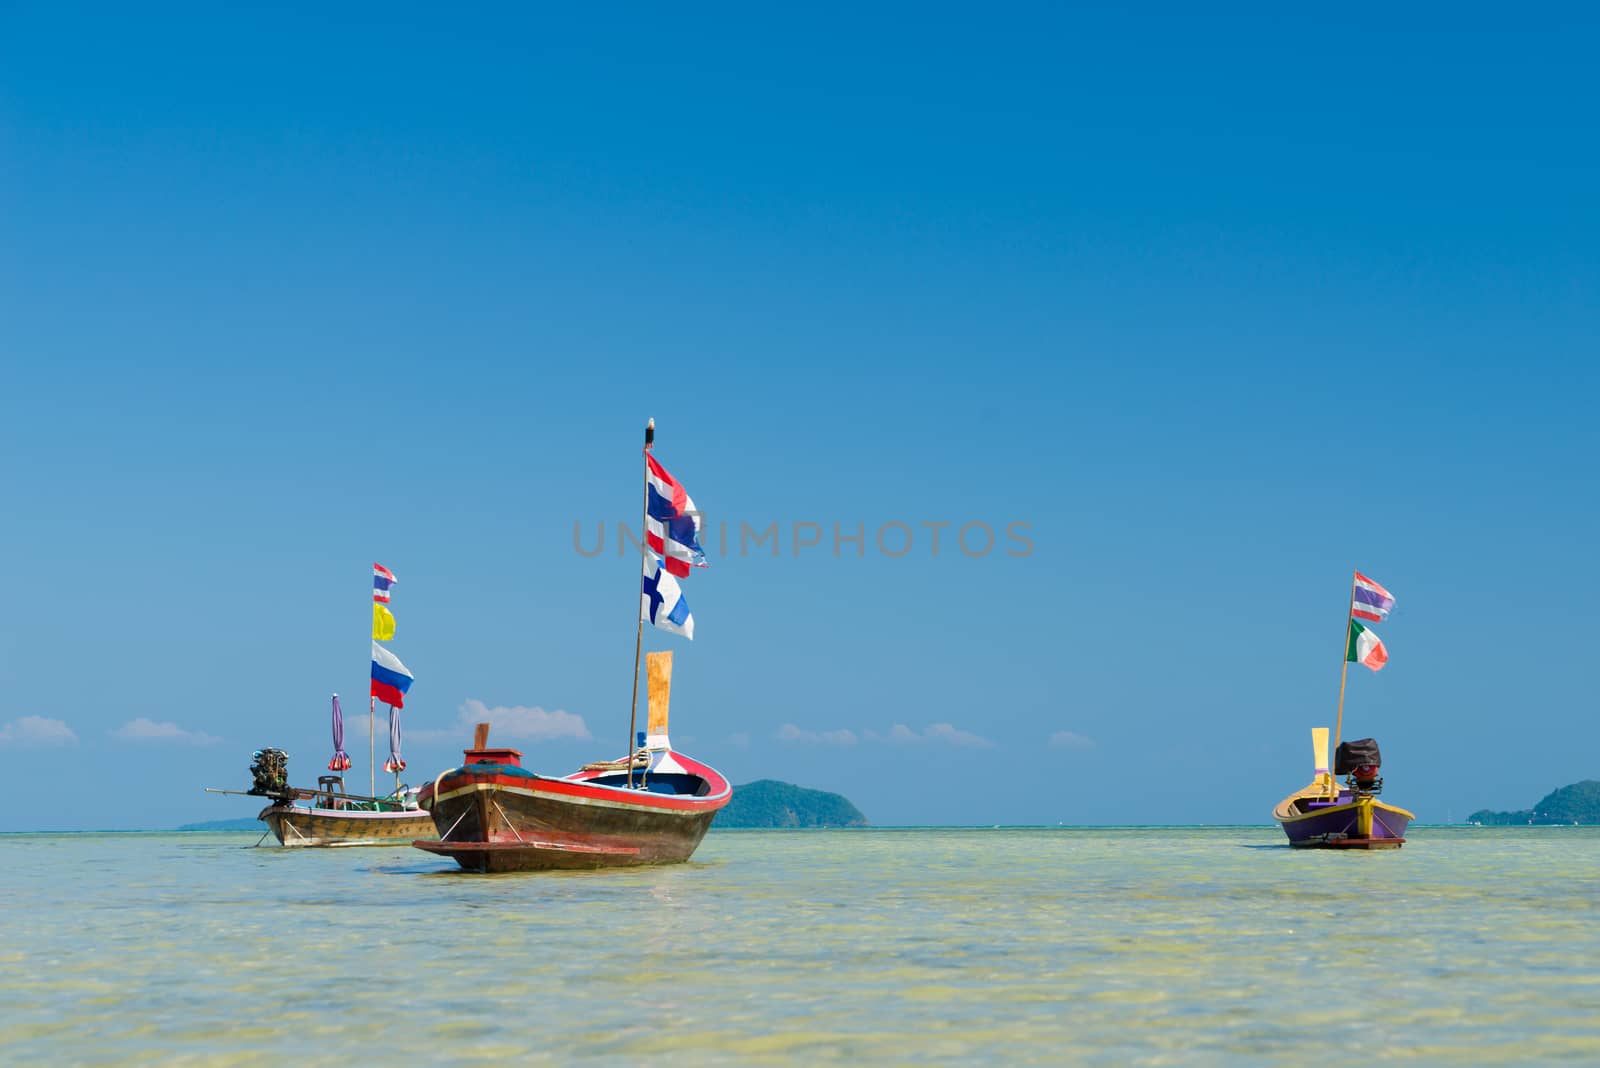 Traditional thai longtail boat at famous sunny Long Beach, Thailand, Koh Phi Phi Don, Krabi province, Andaman sea